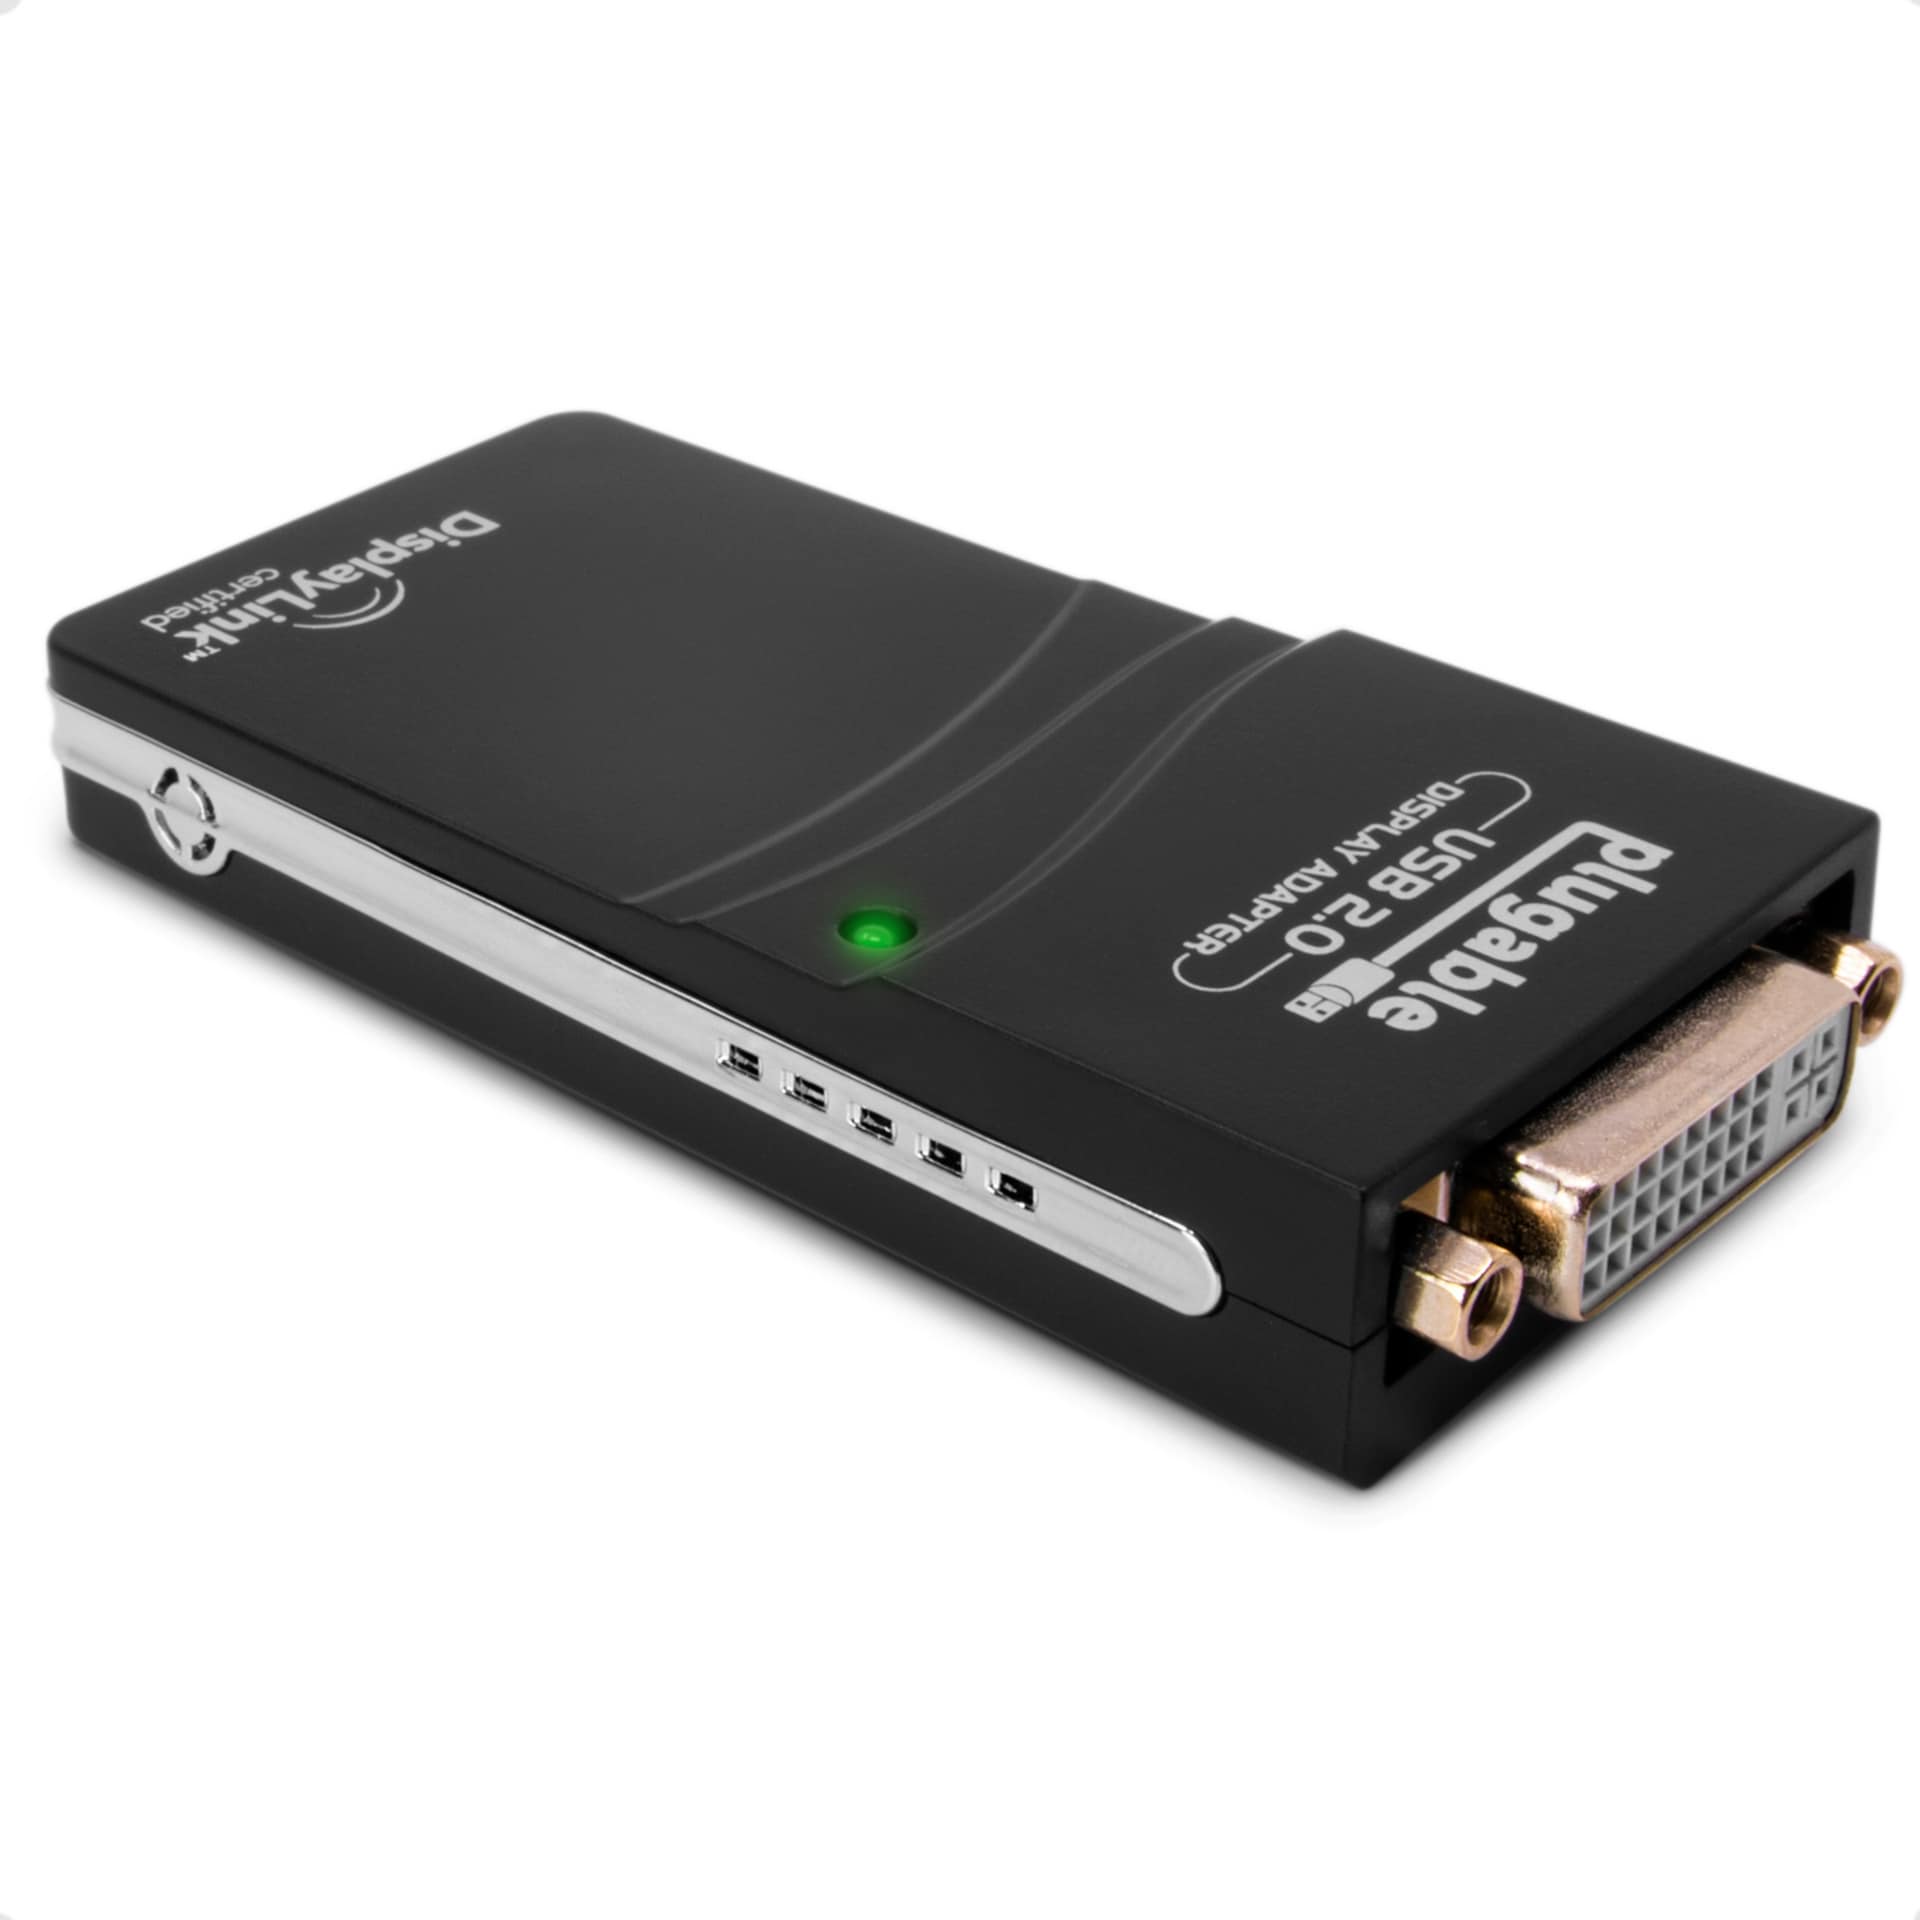 Plugable DisplayLink Monitor Adapter - USB 2.0 to HDMI / DVI / VGA